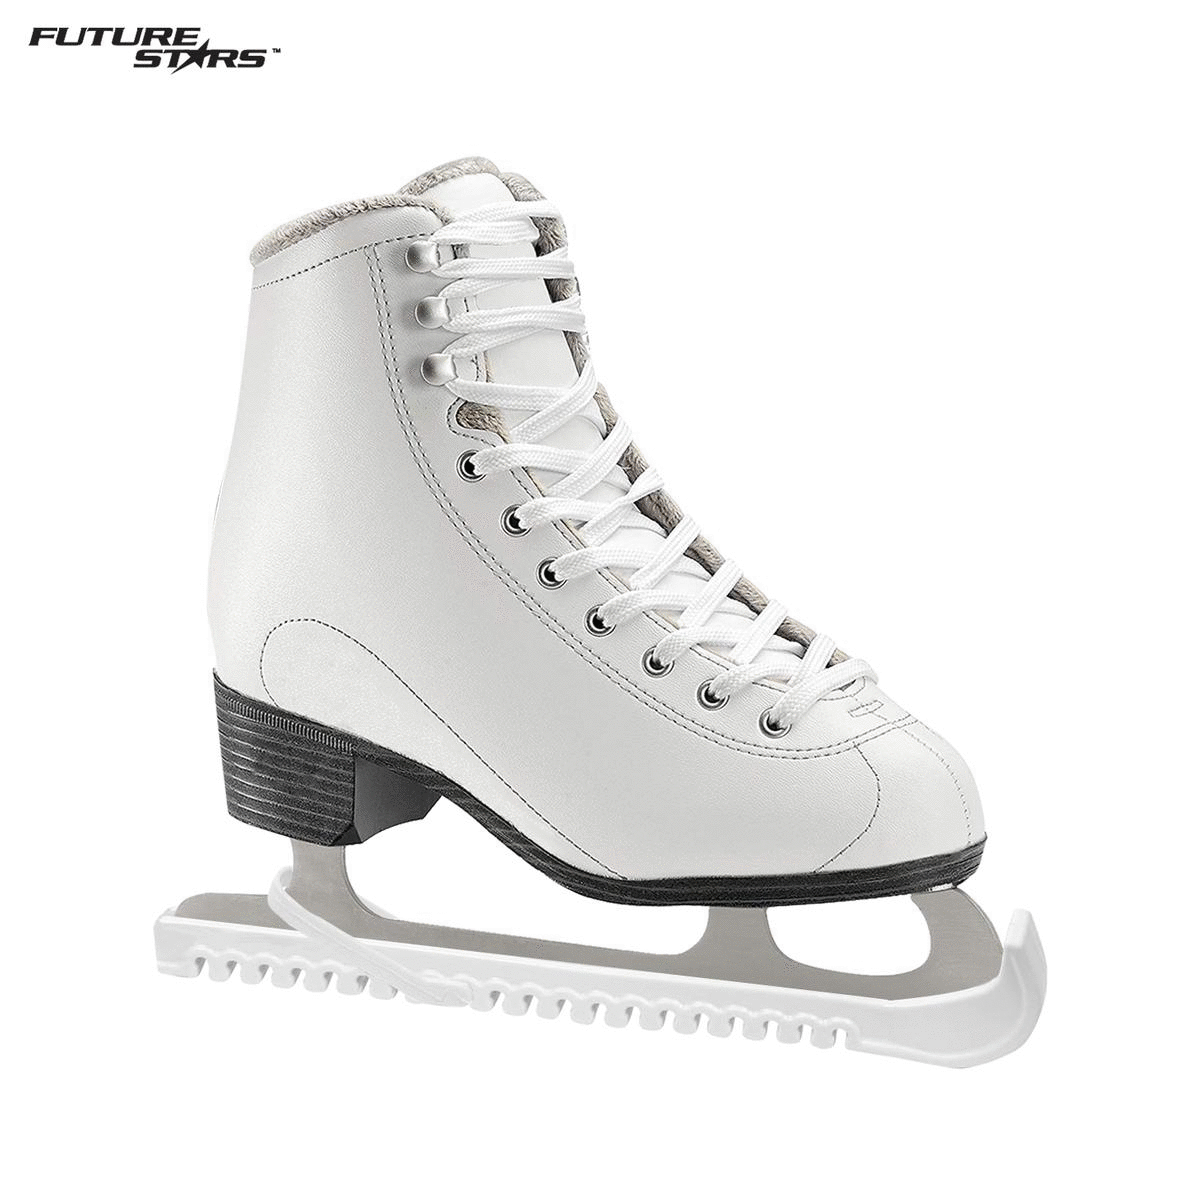 Centipede 4400w White Figure Guard Multi Size Ice Skate Blade Cover in Pkg for sale online 